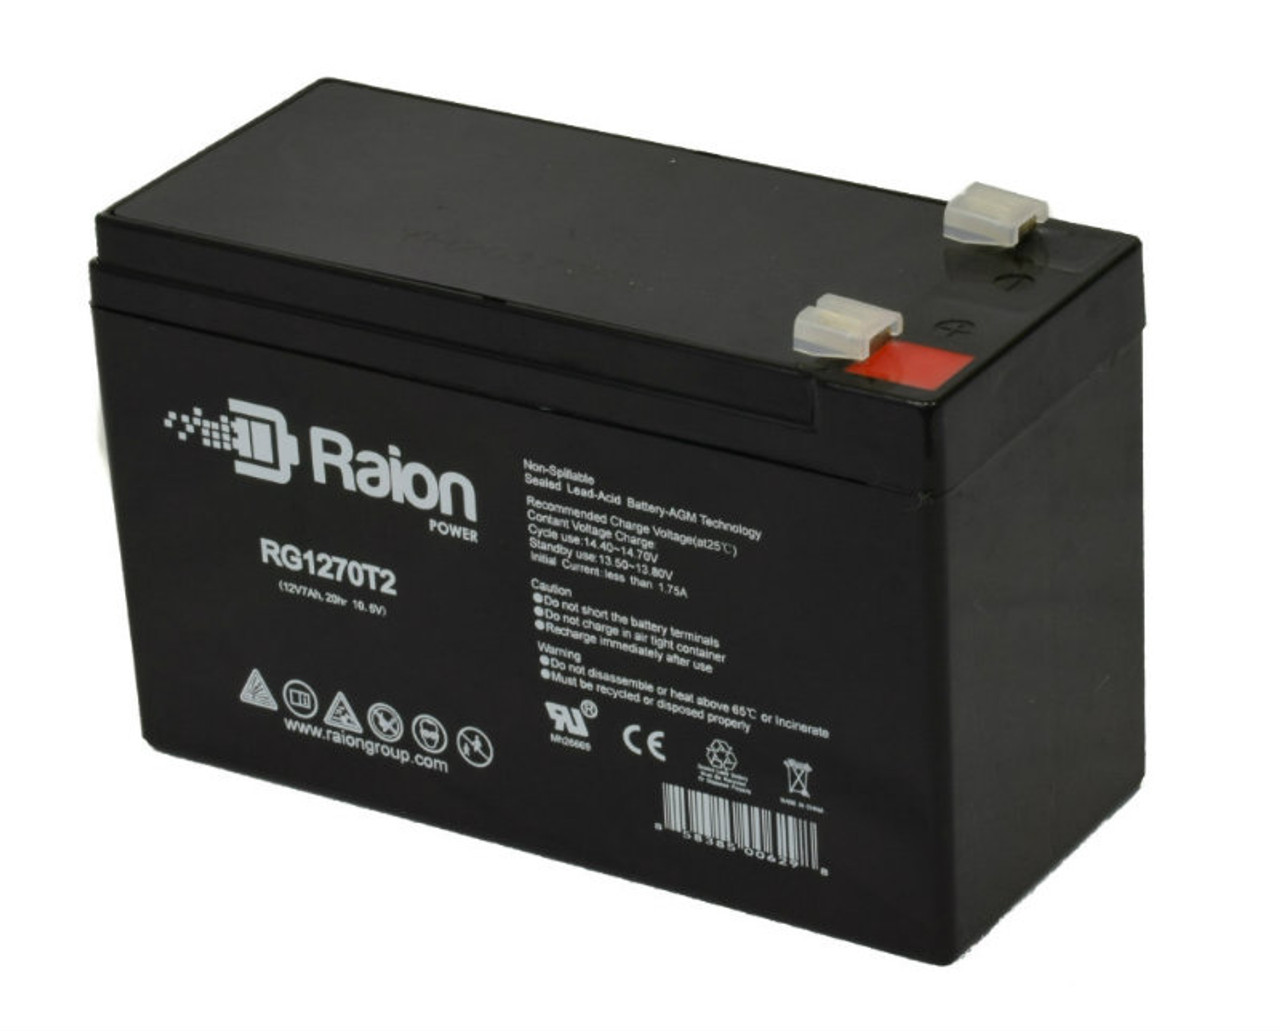 Raion Power RG1270T1 12V 7Ah Non-Spillable Replacement Battery for KSTAR 6-FM-7 F1